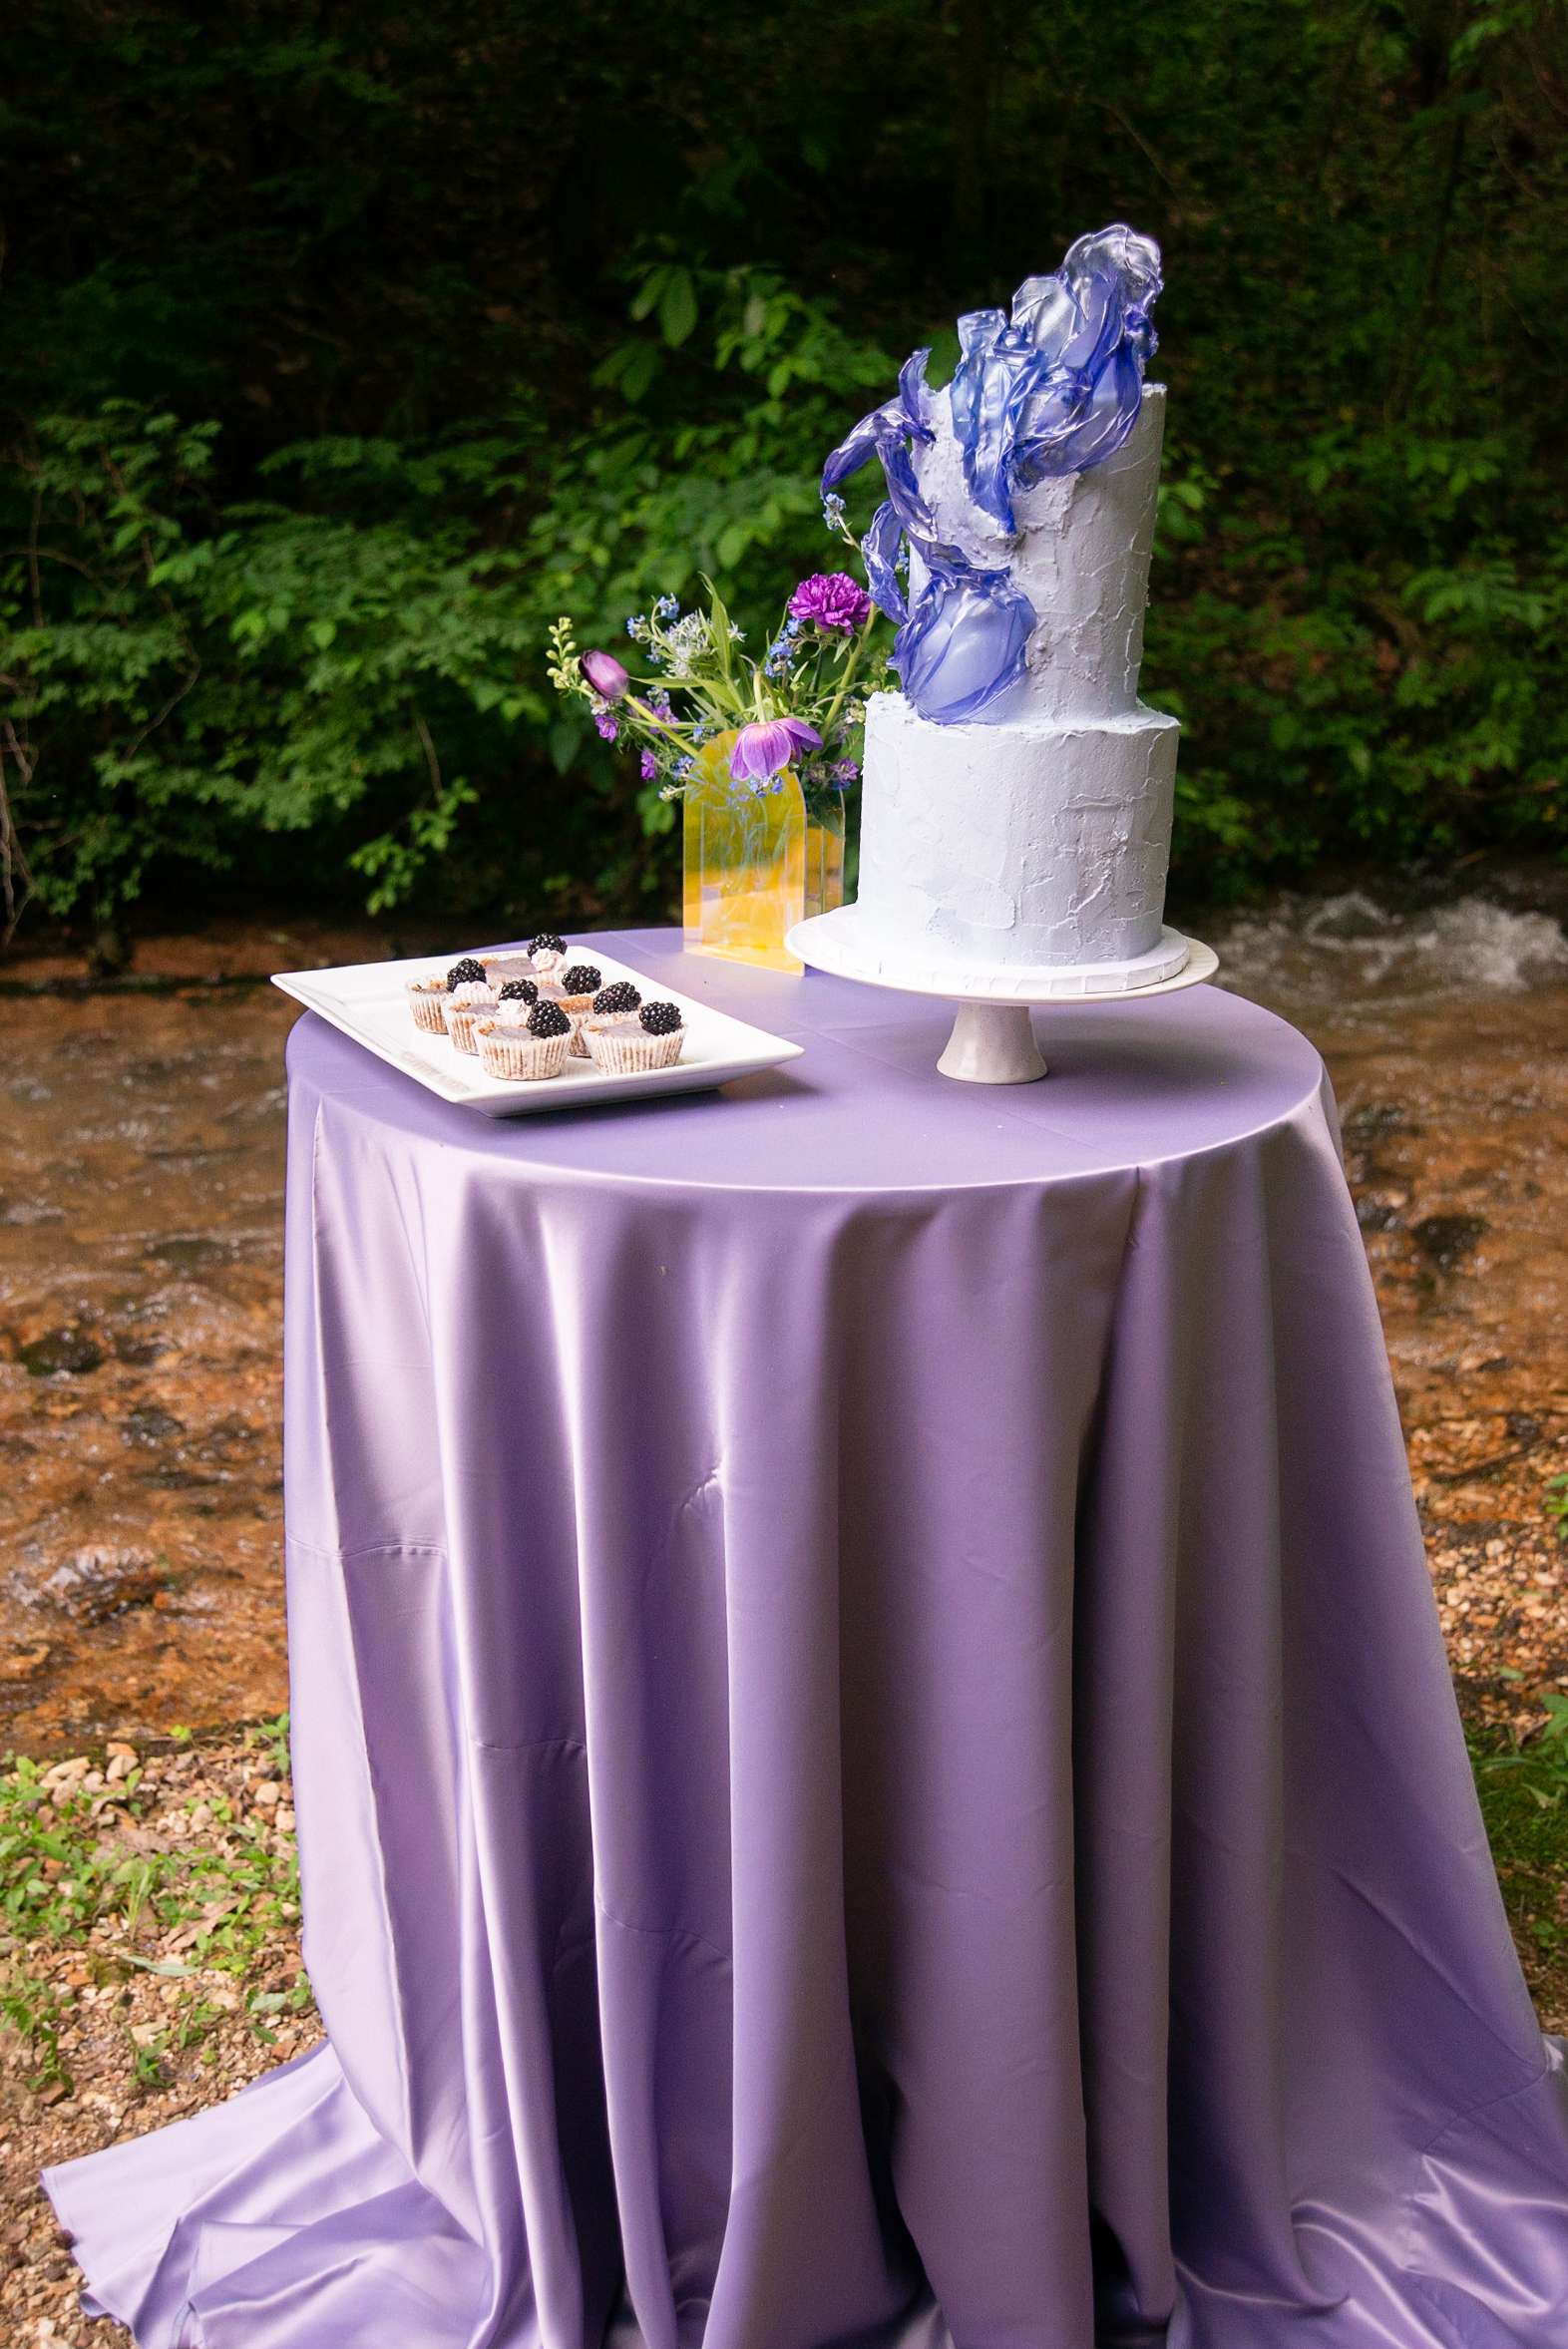 Wedding Cake at reception